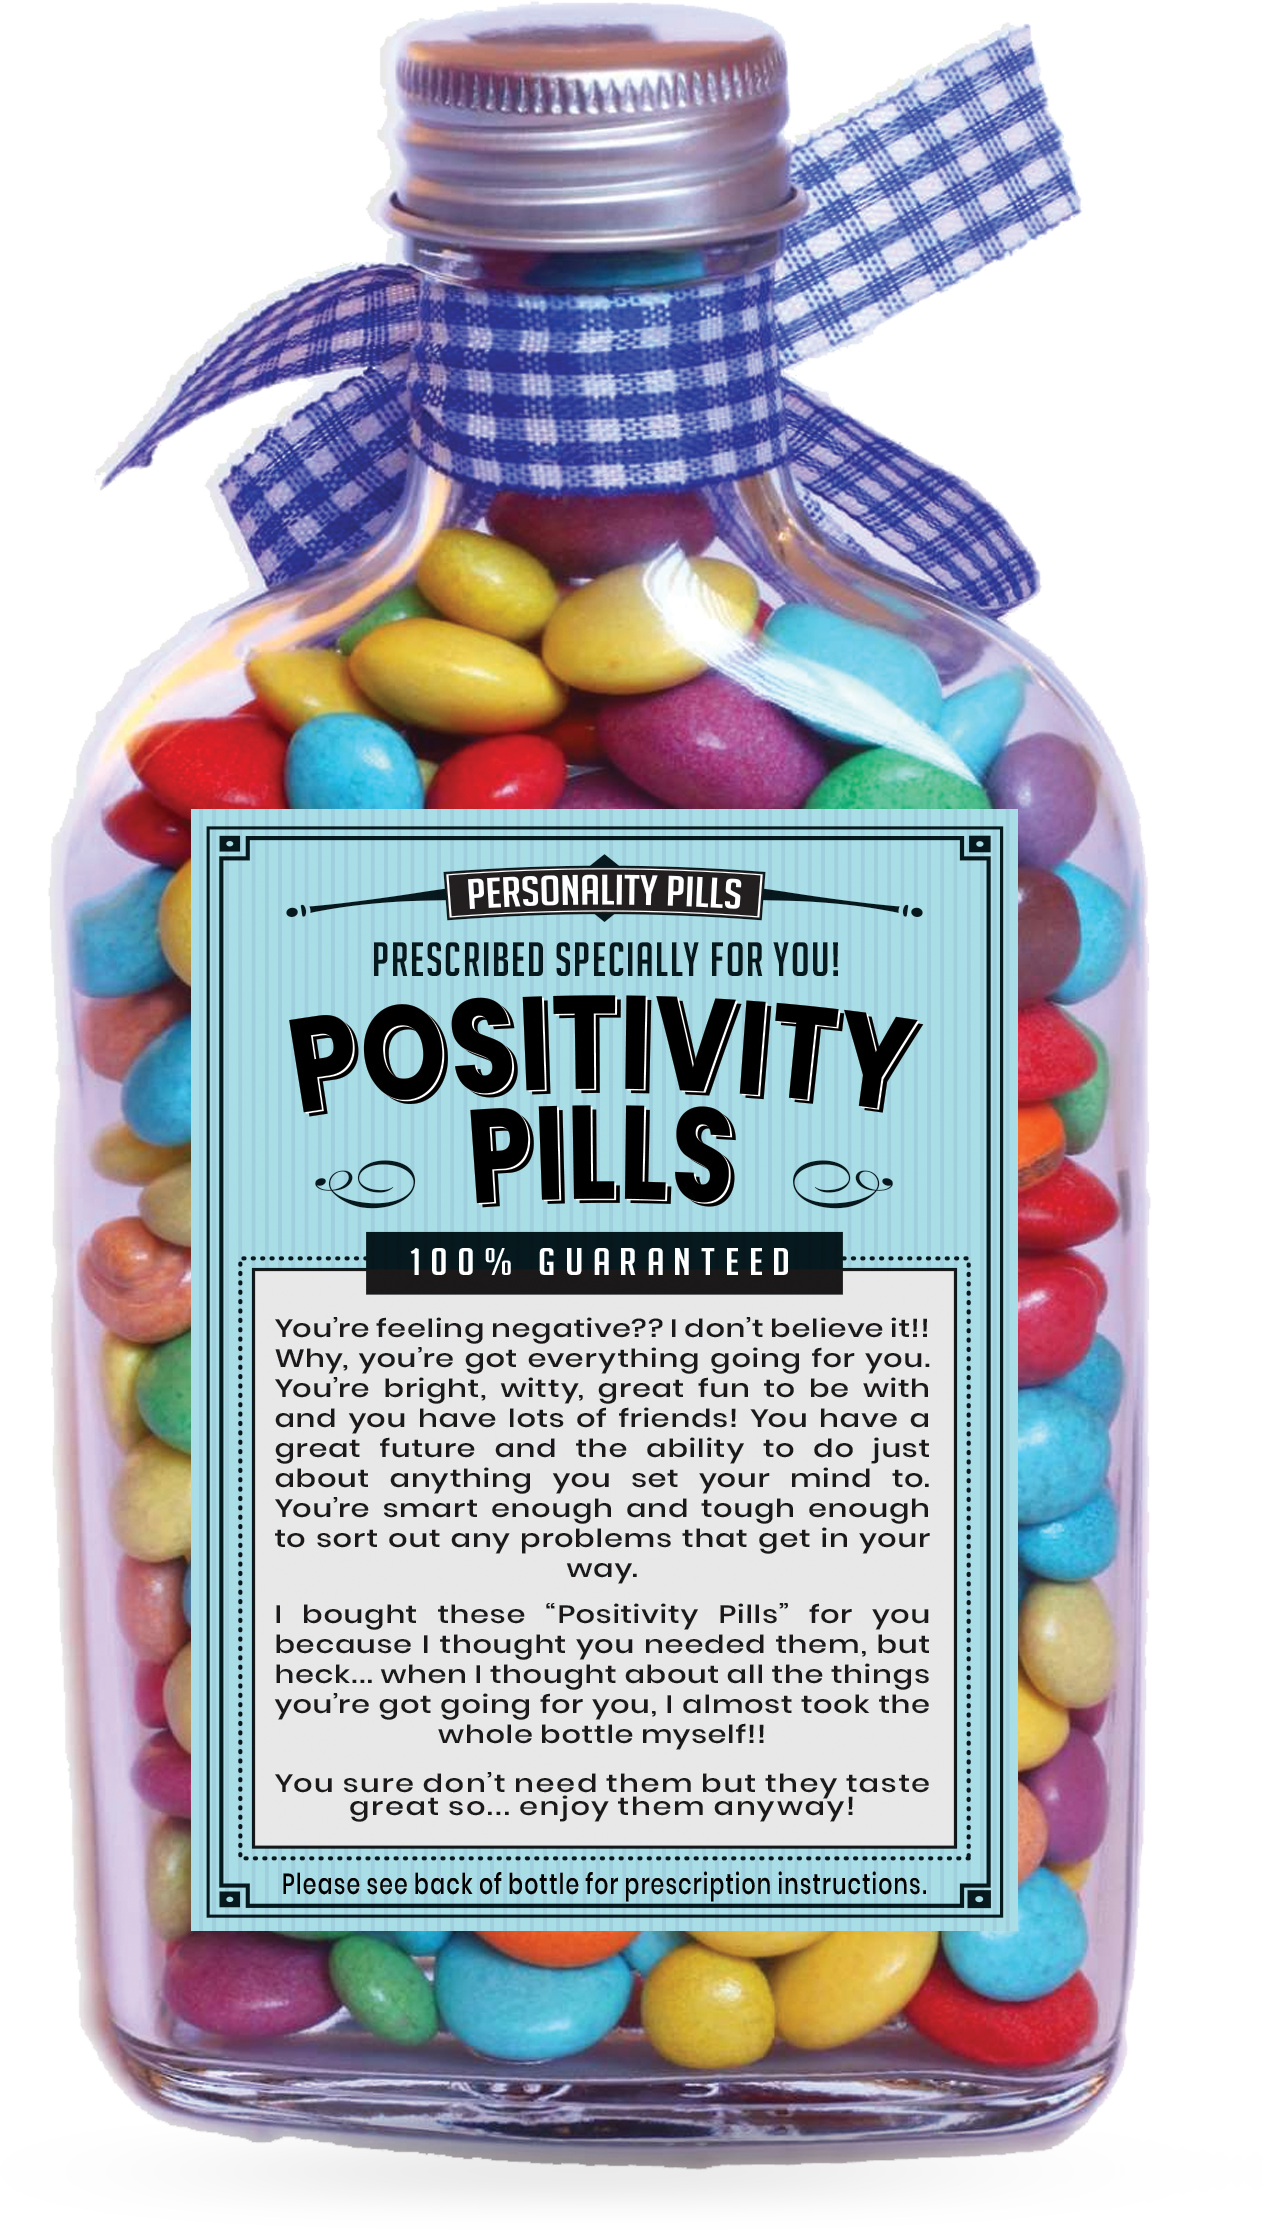 Positivity Pills